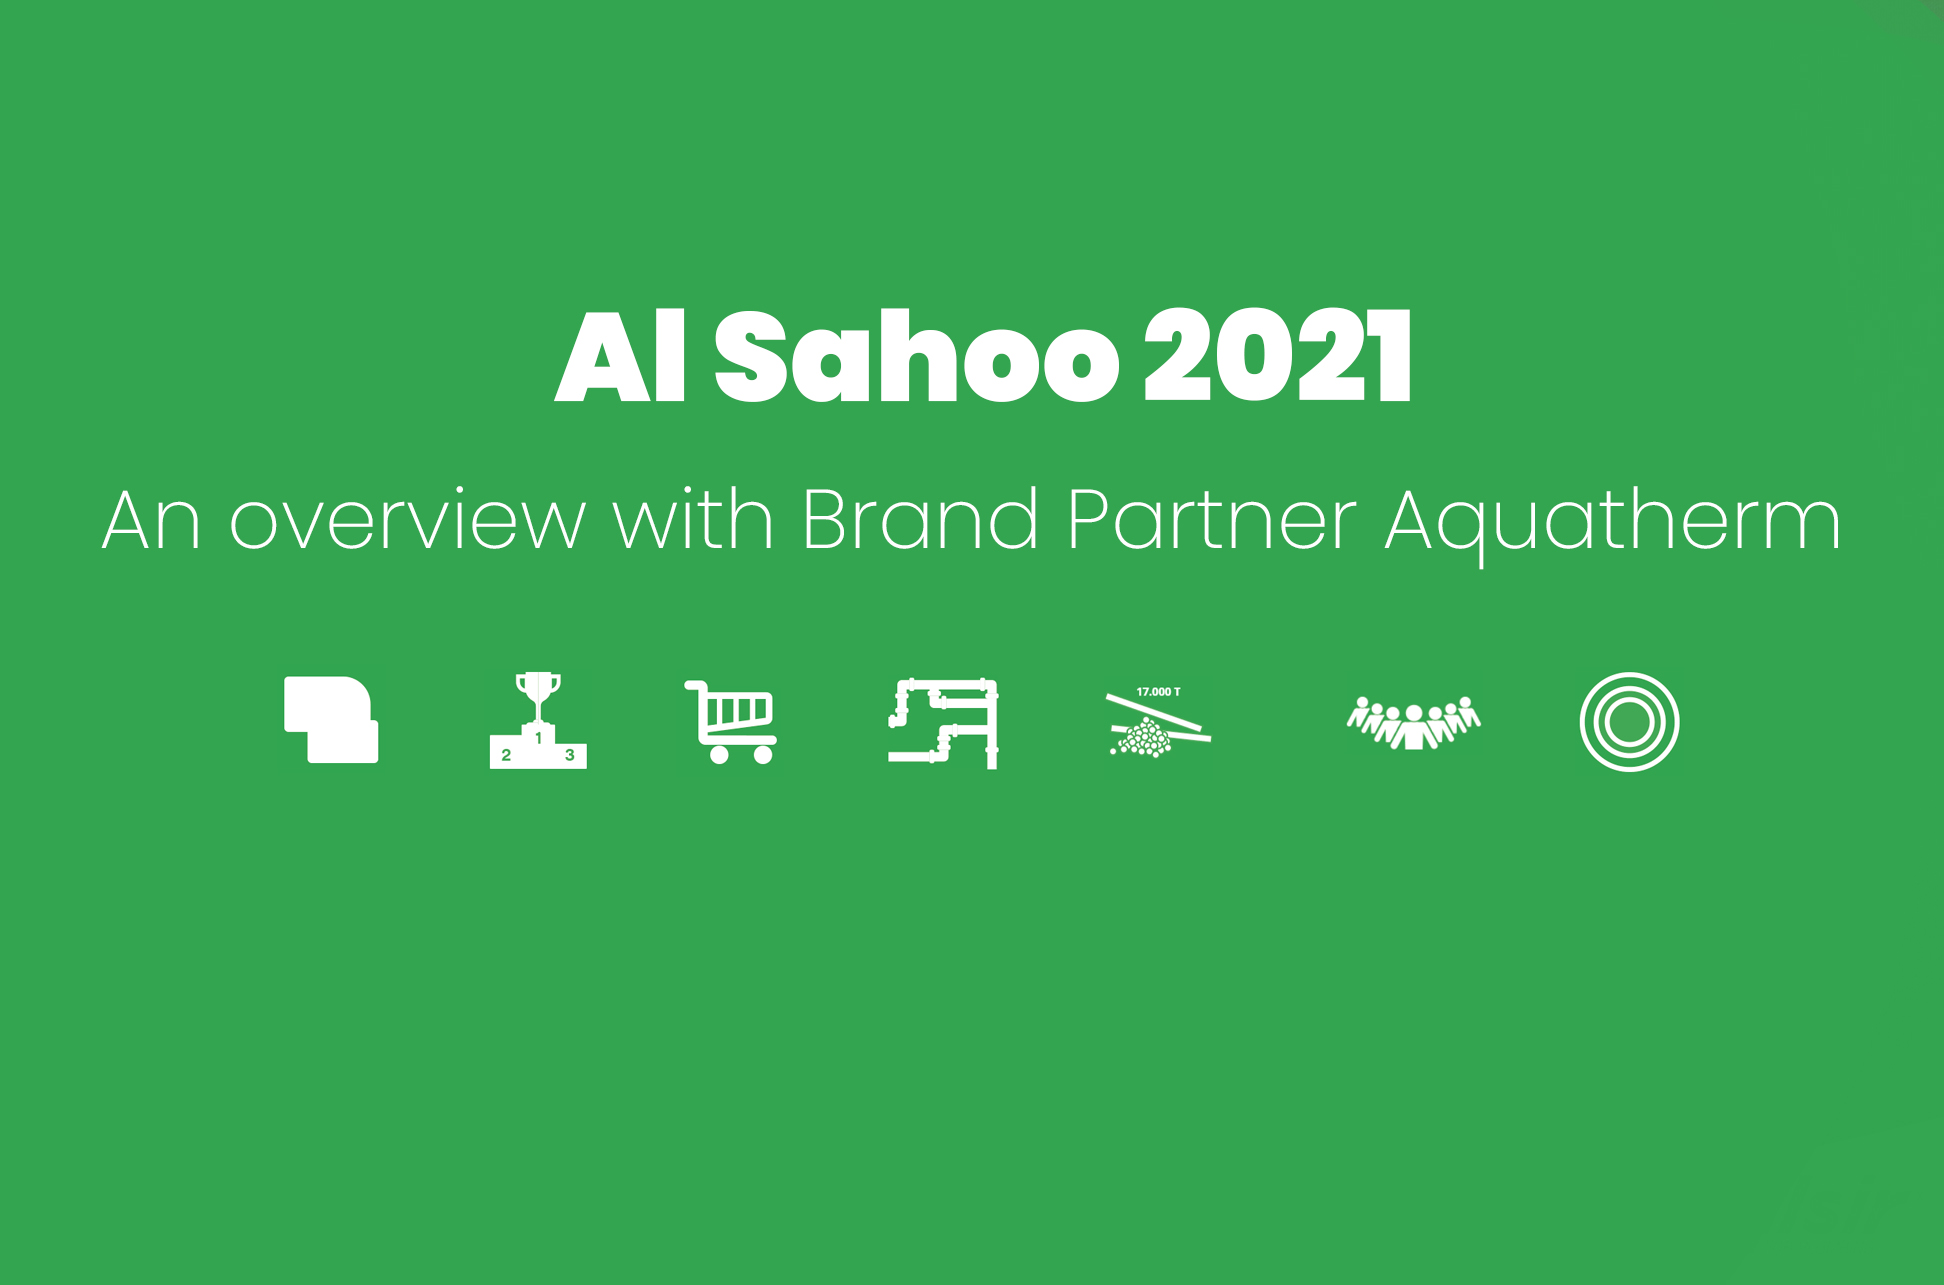 Al Sahoo 2021: An overview with Brand Partner Aquatherm